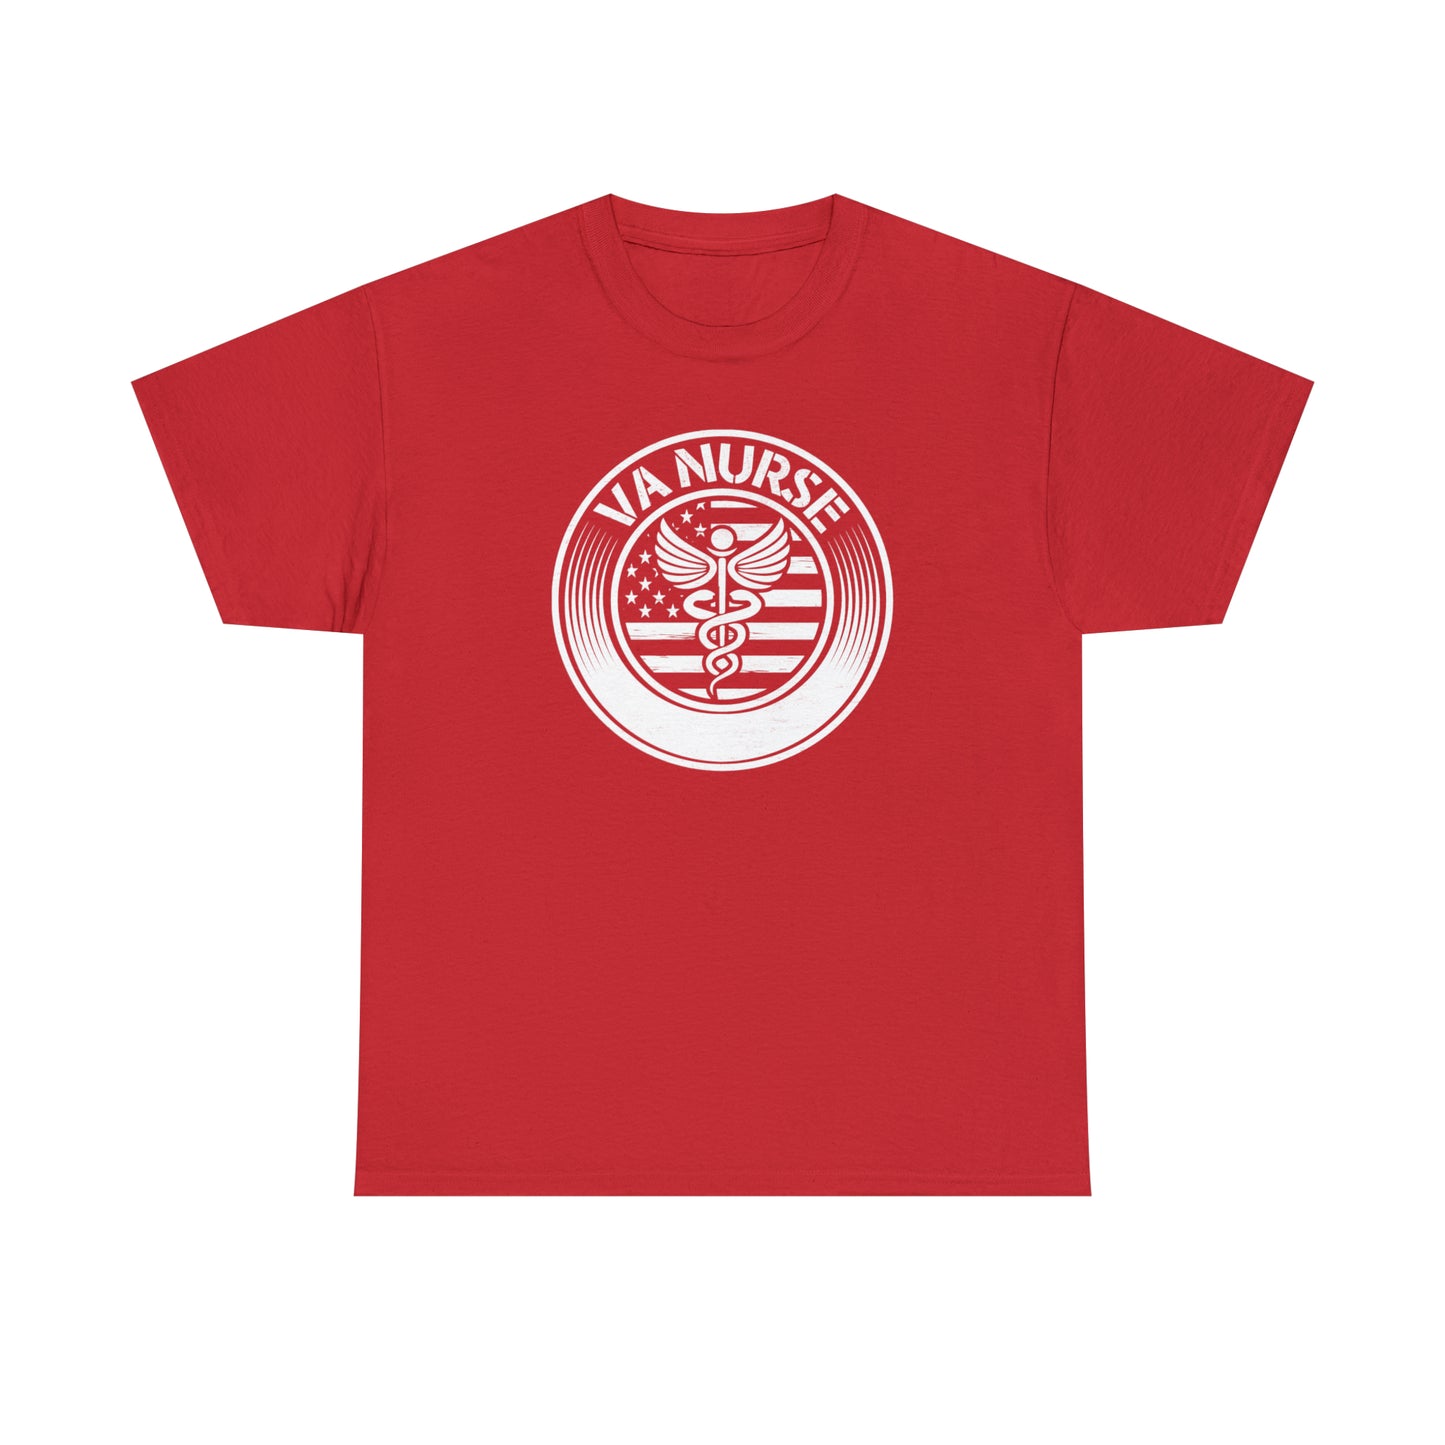 VA Nurse TShirt For Veterans Affairs Nurse T-Shirt For Nurse Appreciation Gift For Military Nurse T Shirt For Patriotic Nurse Shirt